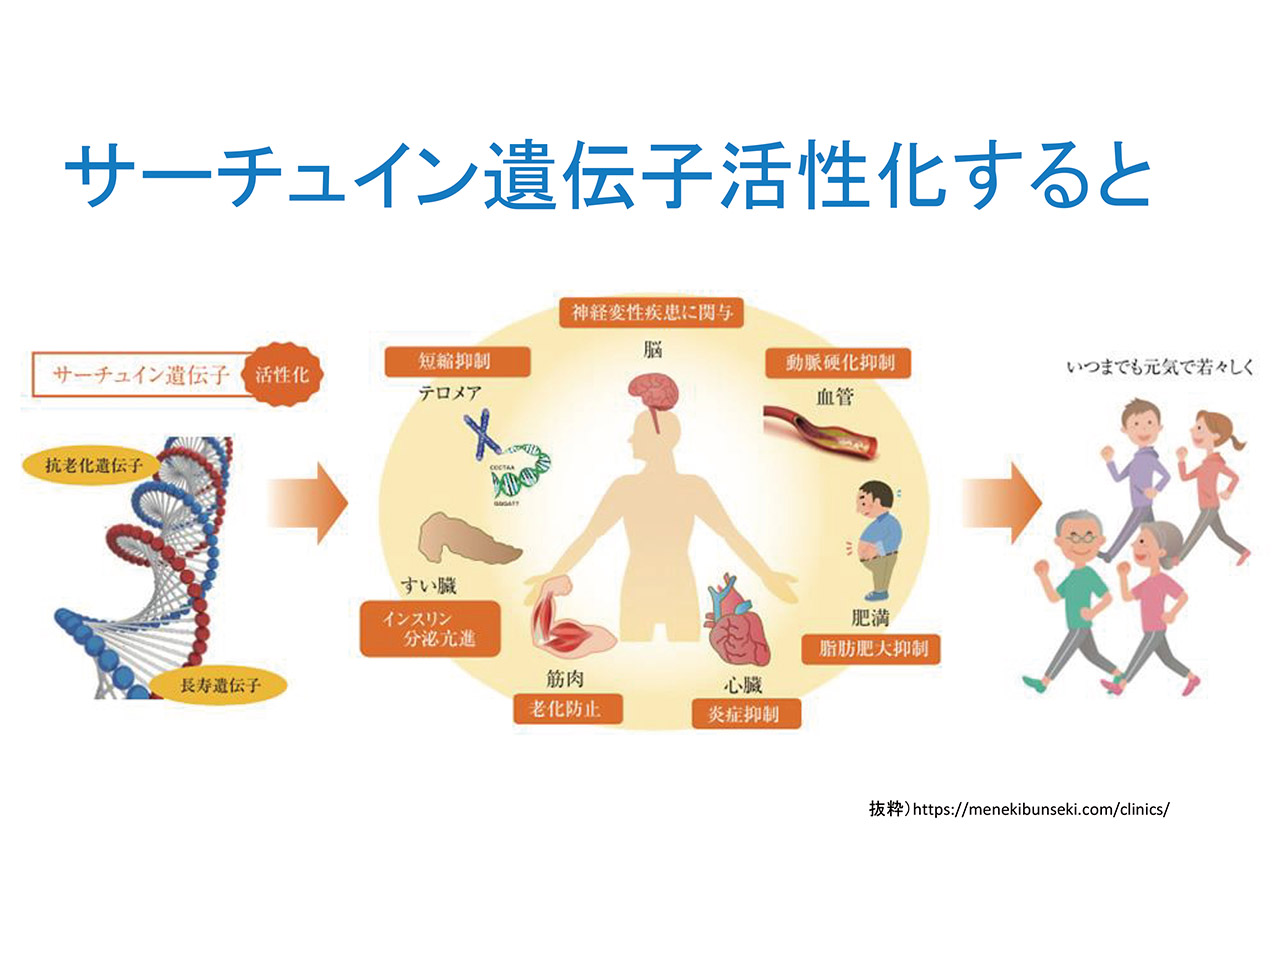 NMNによるサーチュイン遺伝子の活性化